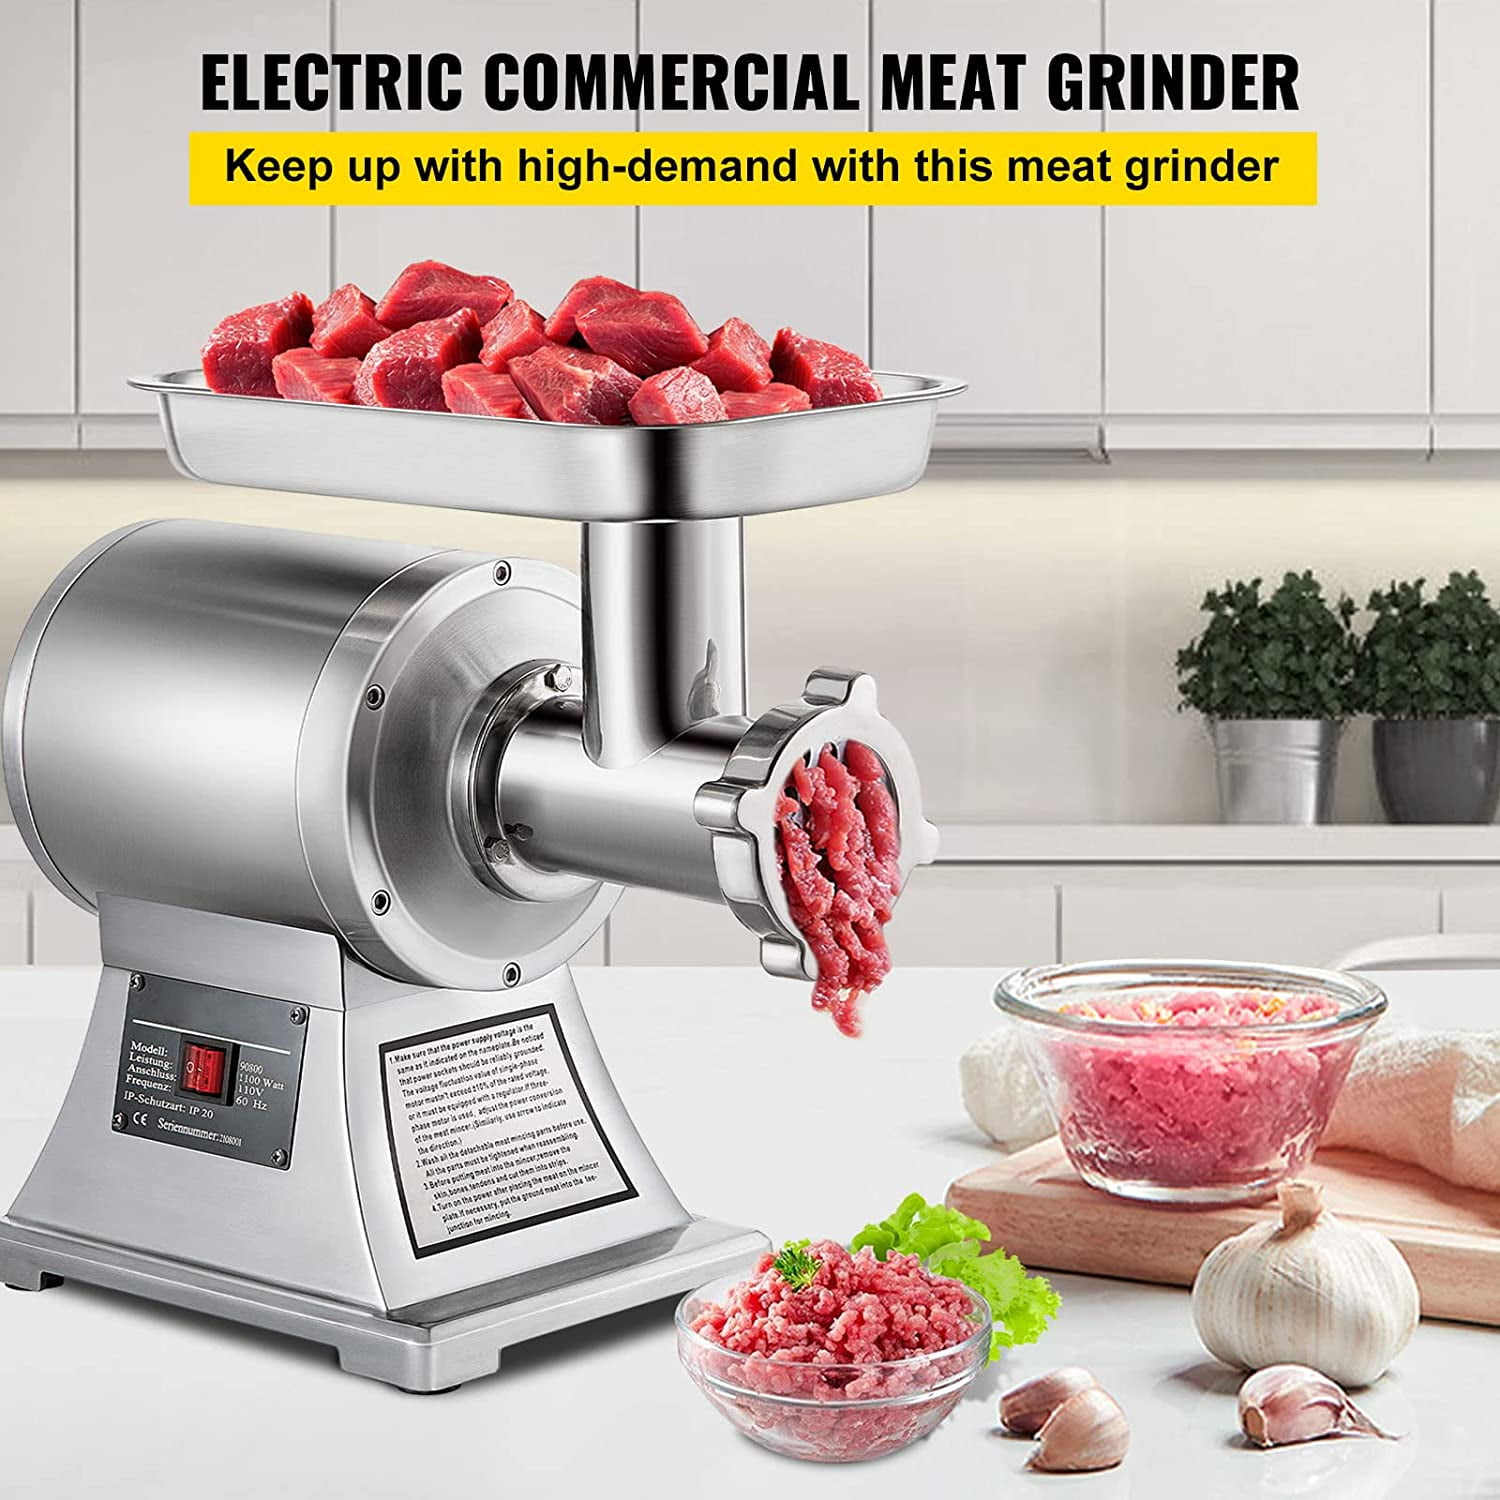 VEVOR 1100 W Commercial Meat Grinder 660 lb./Hour Electric Sausage Maker  Detachable Head Easy Clean with Waterproof Switch JRJXZAT-22A300KG1V1 - The  Home Depot